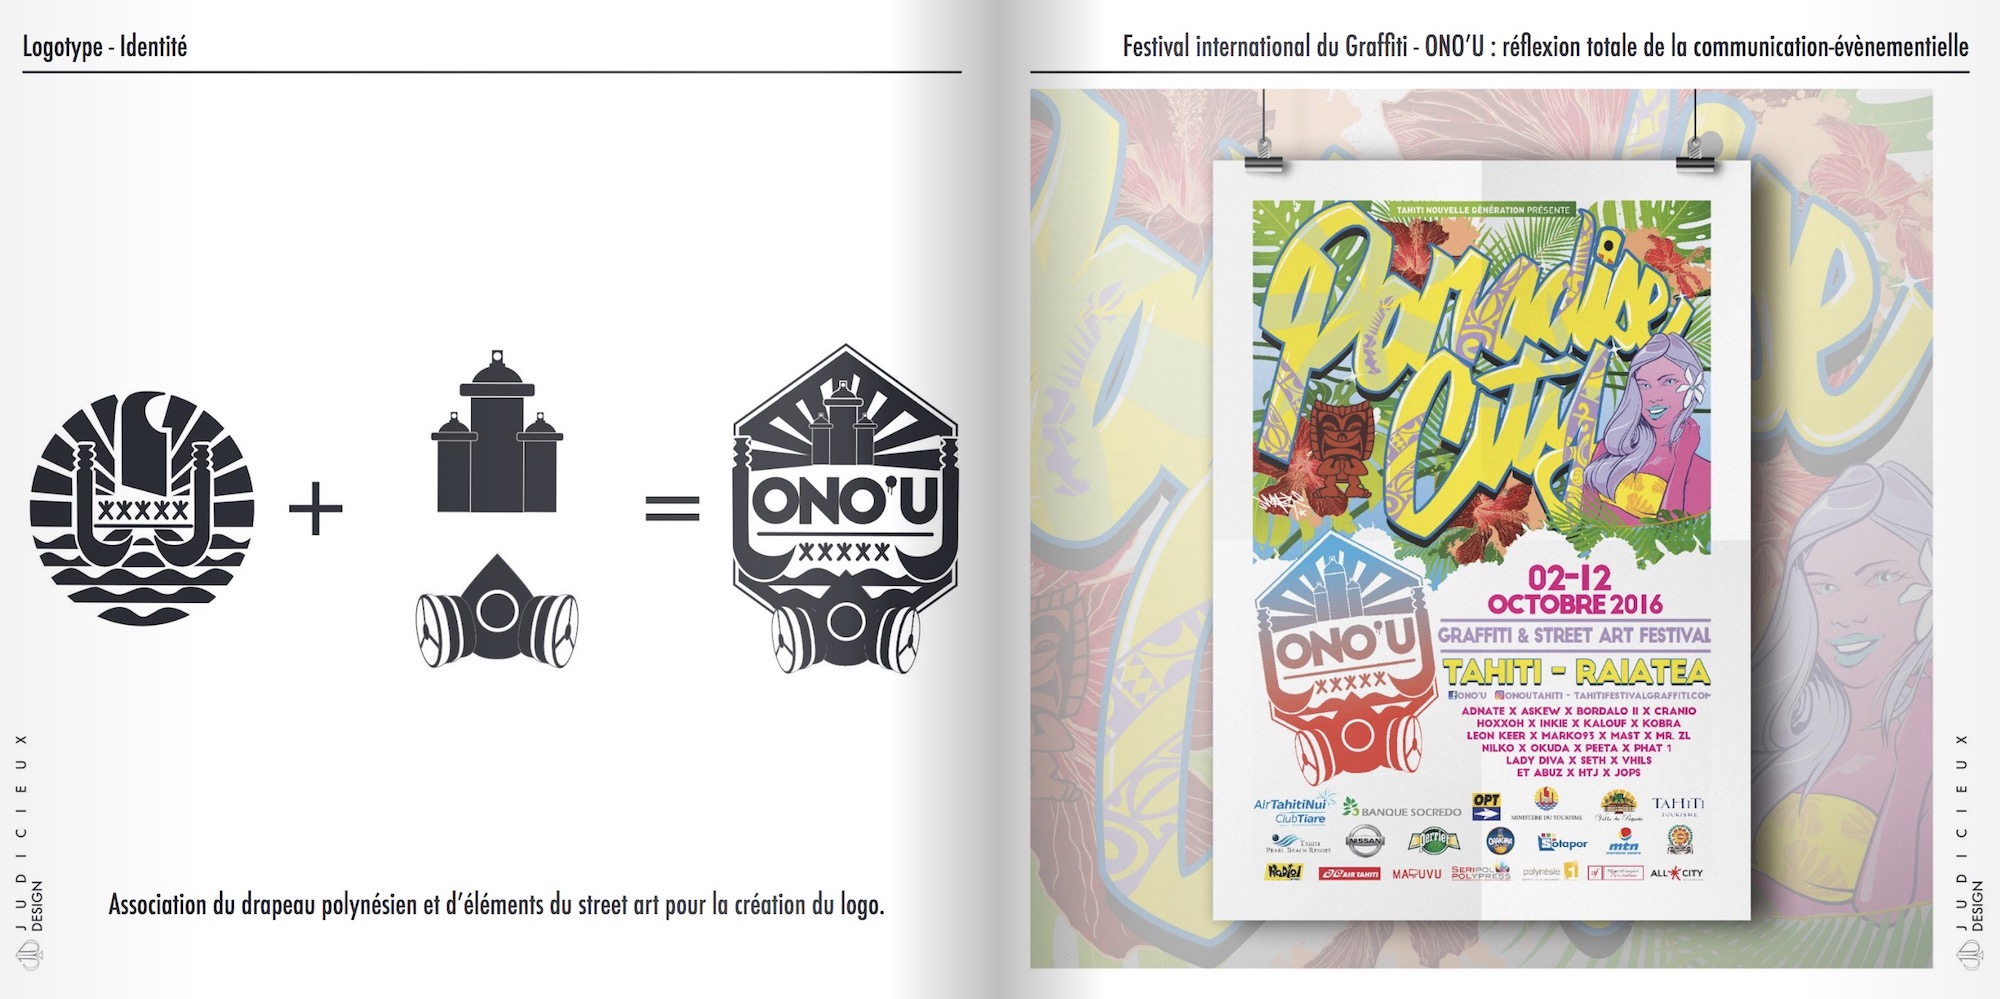 ONO'U Festival international de graffiti et street art